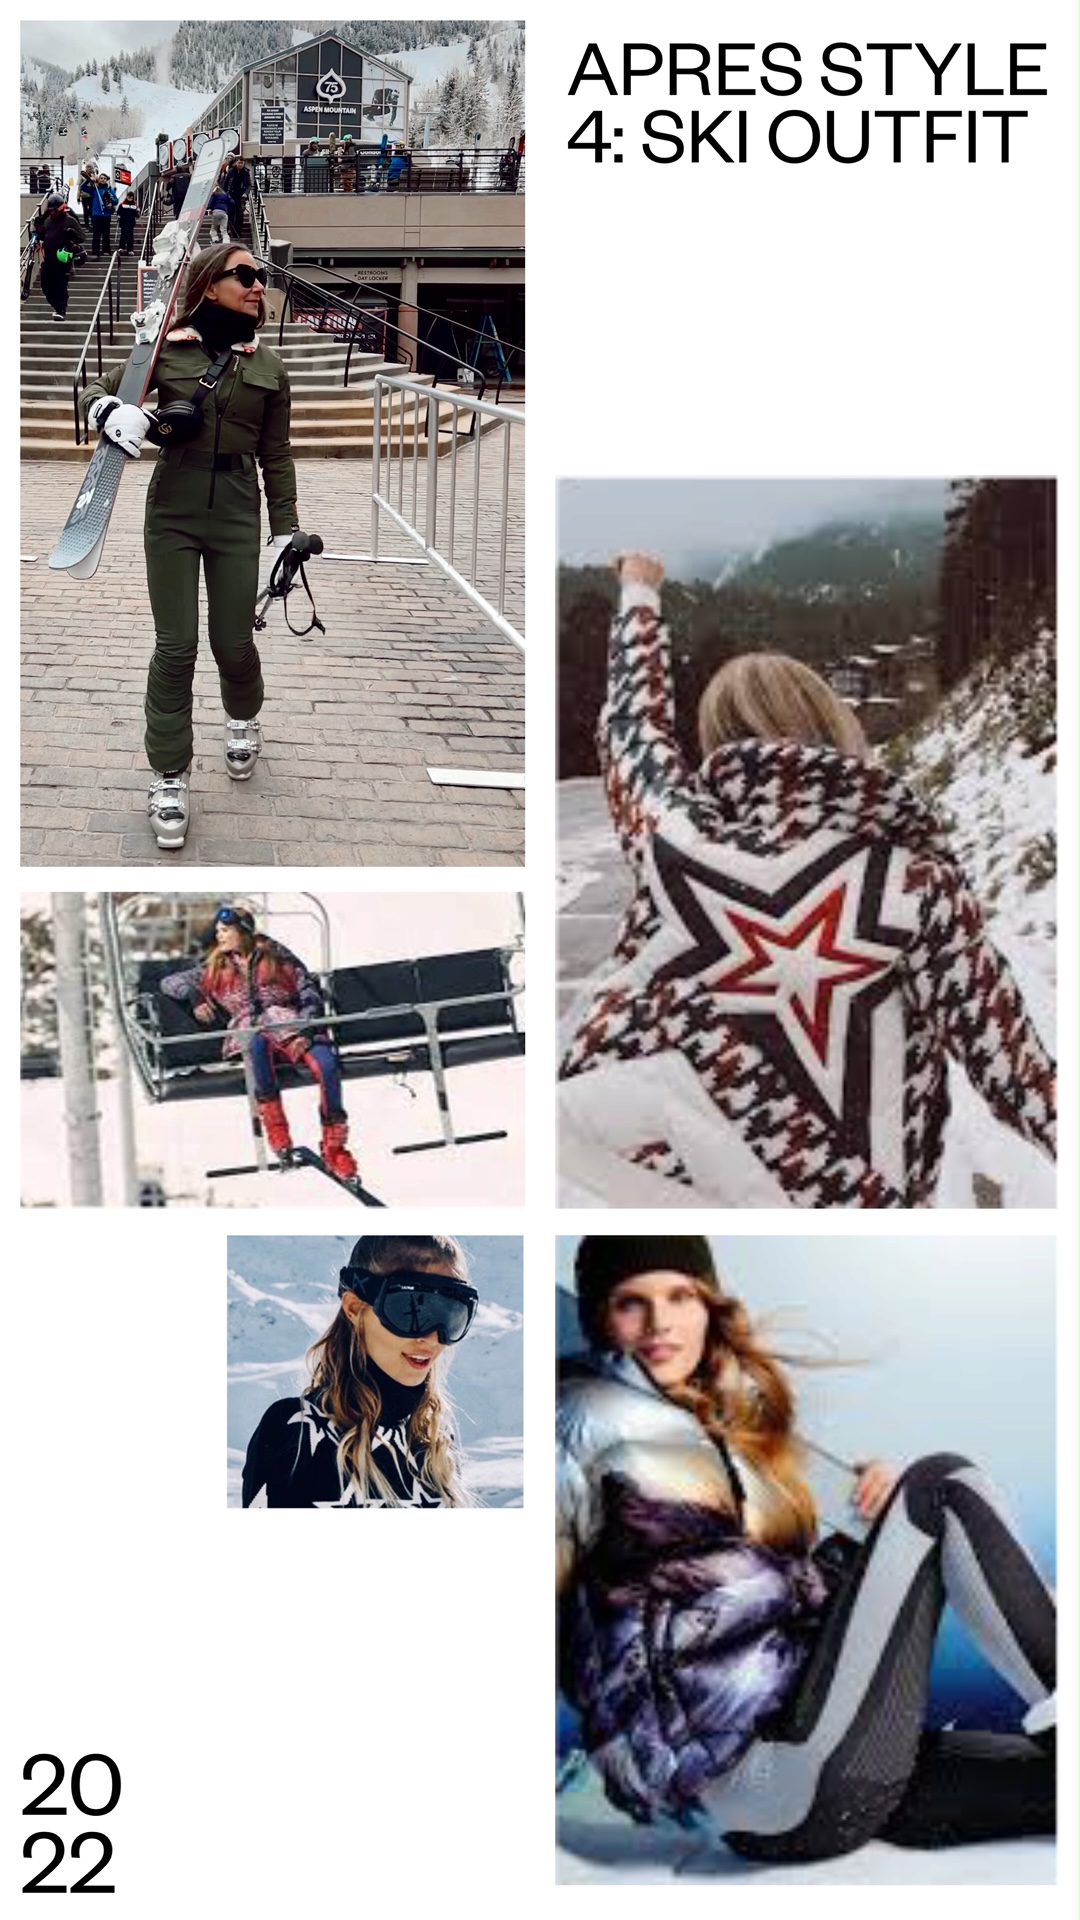 apres-style-aspen-lucy-macgill-loves-ski-suit